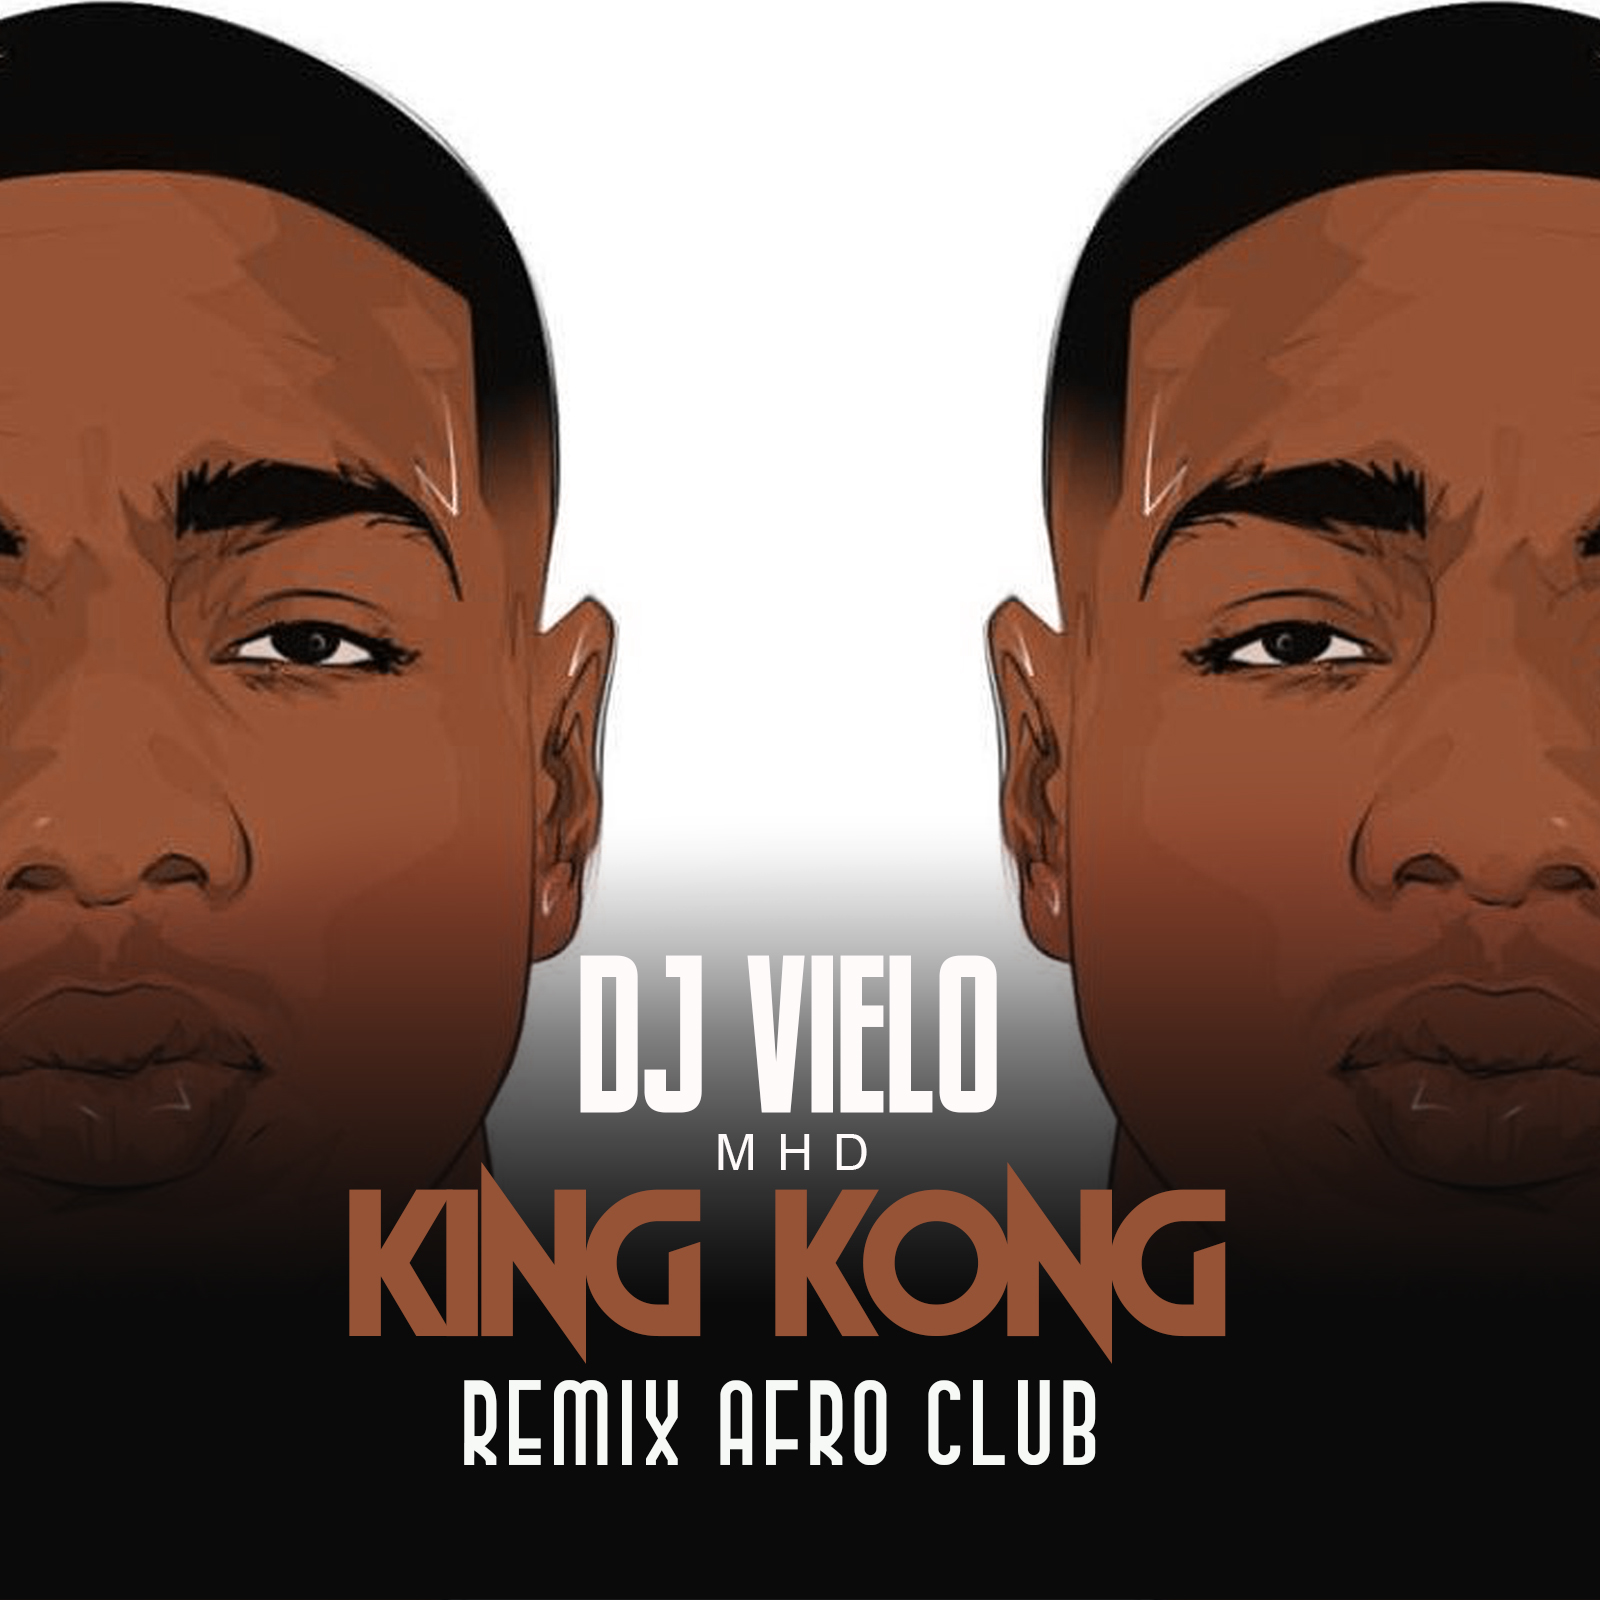 डाउनलोड करा Dj Vielo X MHD - AFRO TRAP Part.11 (King Kong) Remix Afro Club DISPO SUR SPOTIFY, DEEZER, ITUNES